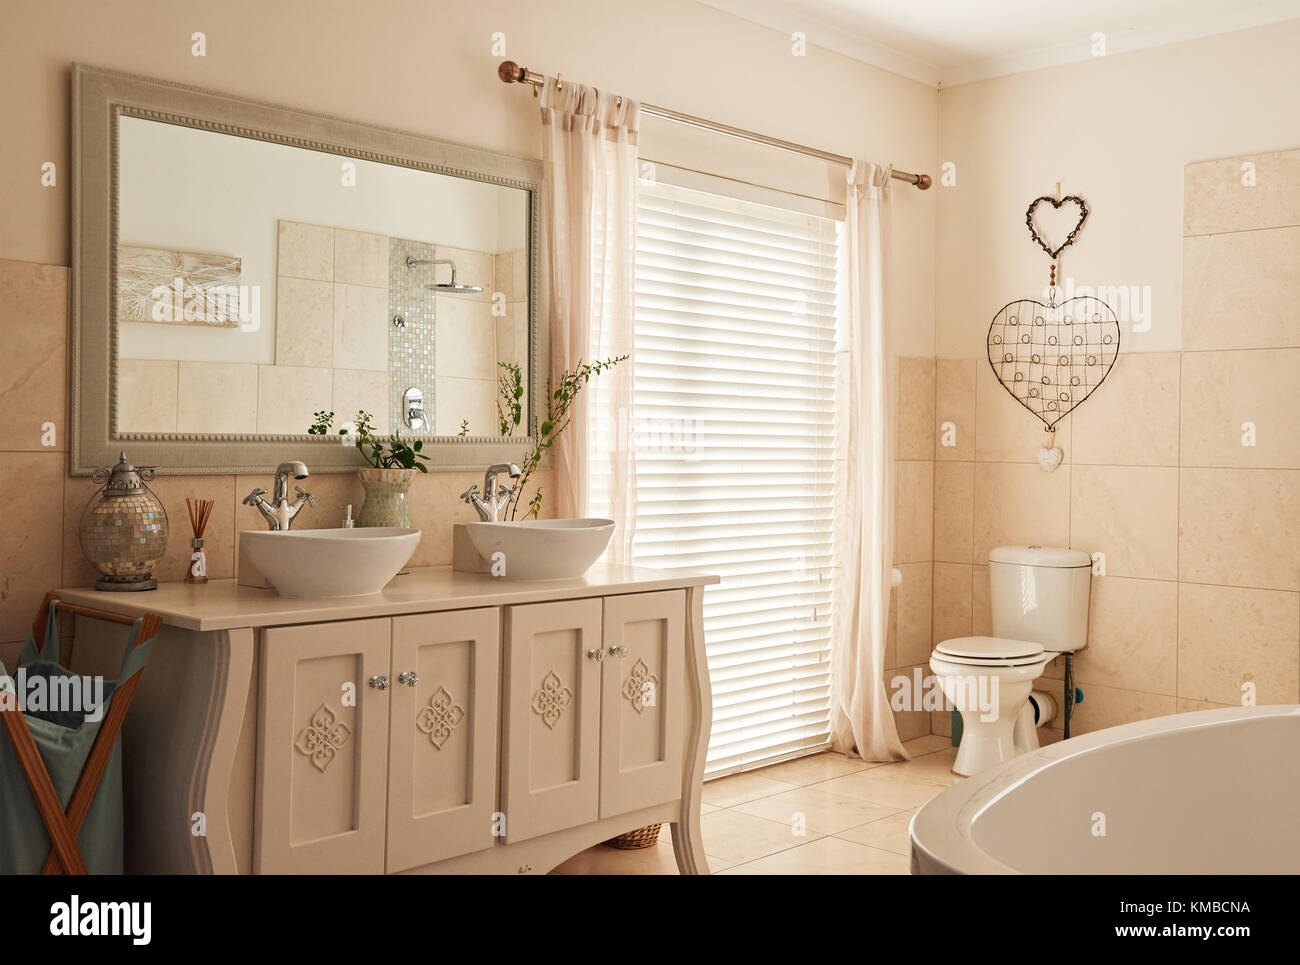 Stylish bathroom interior in a modern suburban home Stock Photo